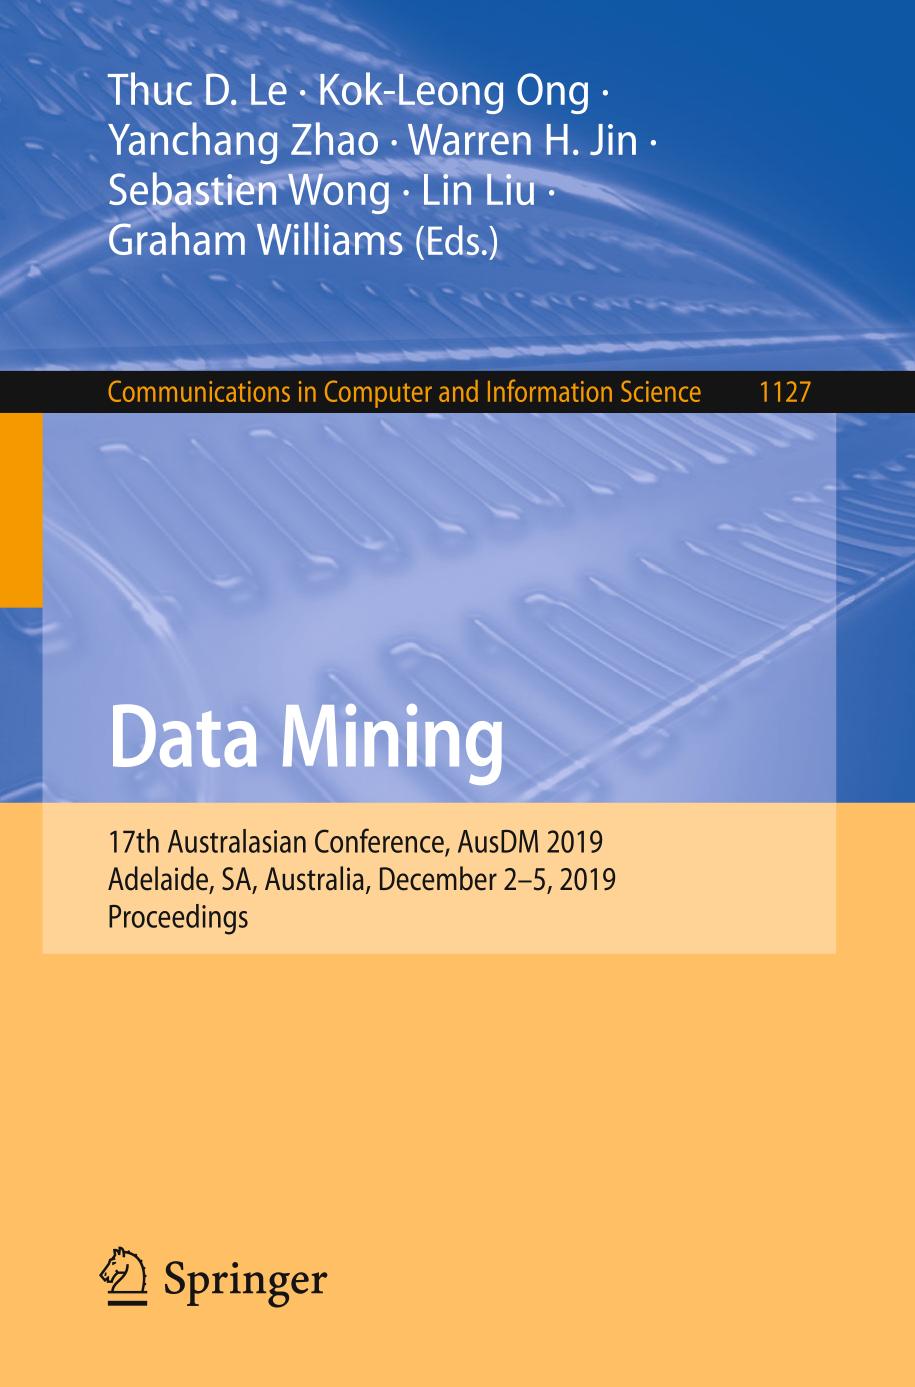 Data Mining : 17th Australasian Conference, AusDM 2019, Adelaide, SA, Australia, December 2-5, 2019, Proceedings.